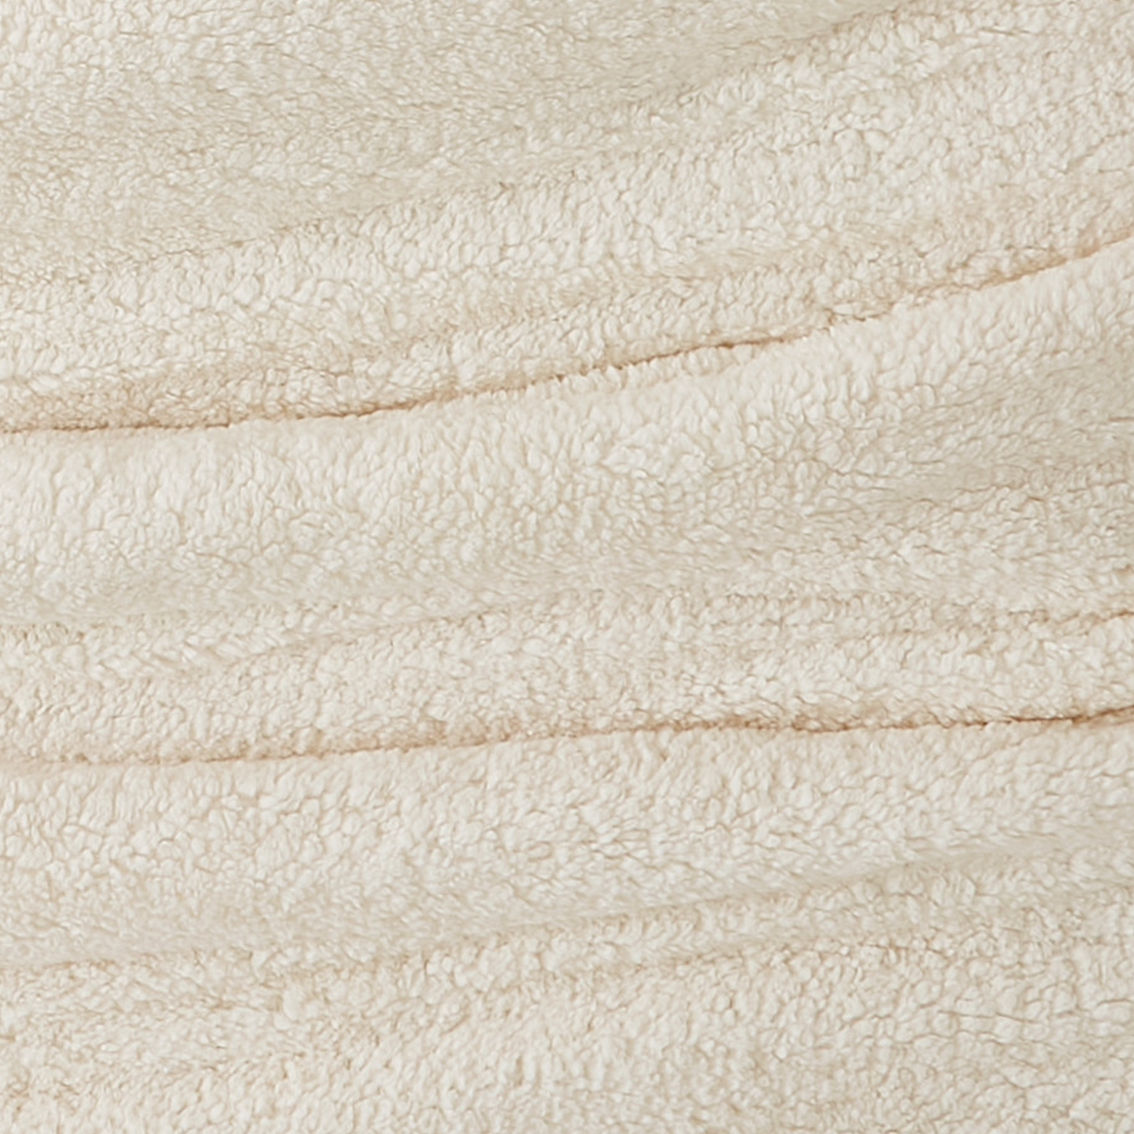 Brooklyn Loom Marshmallow Sherpa Comforter Set - Image 5 of 5